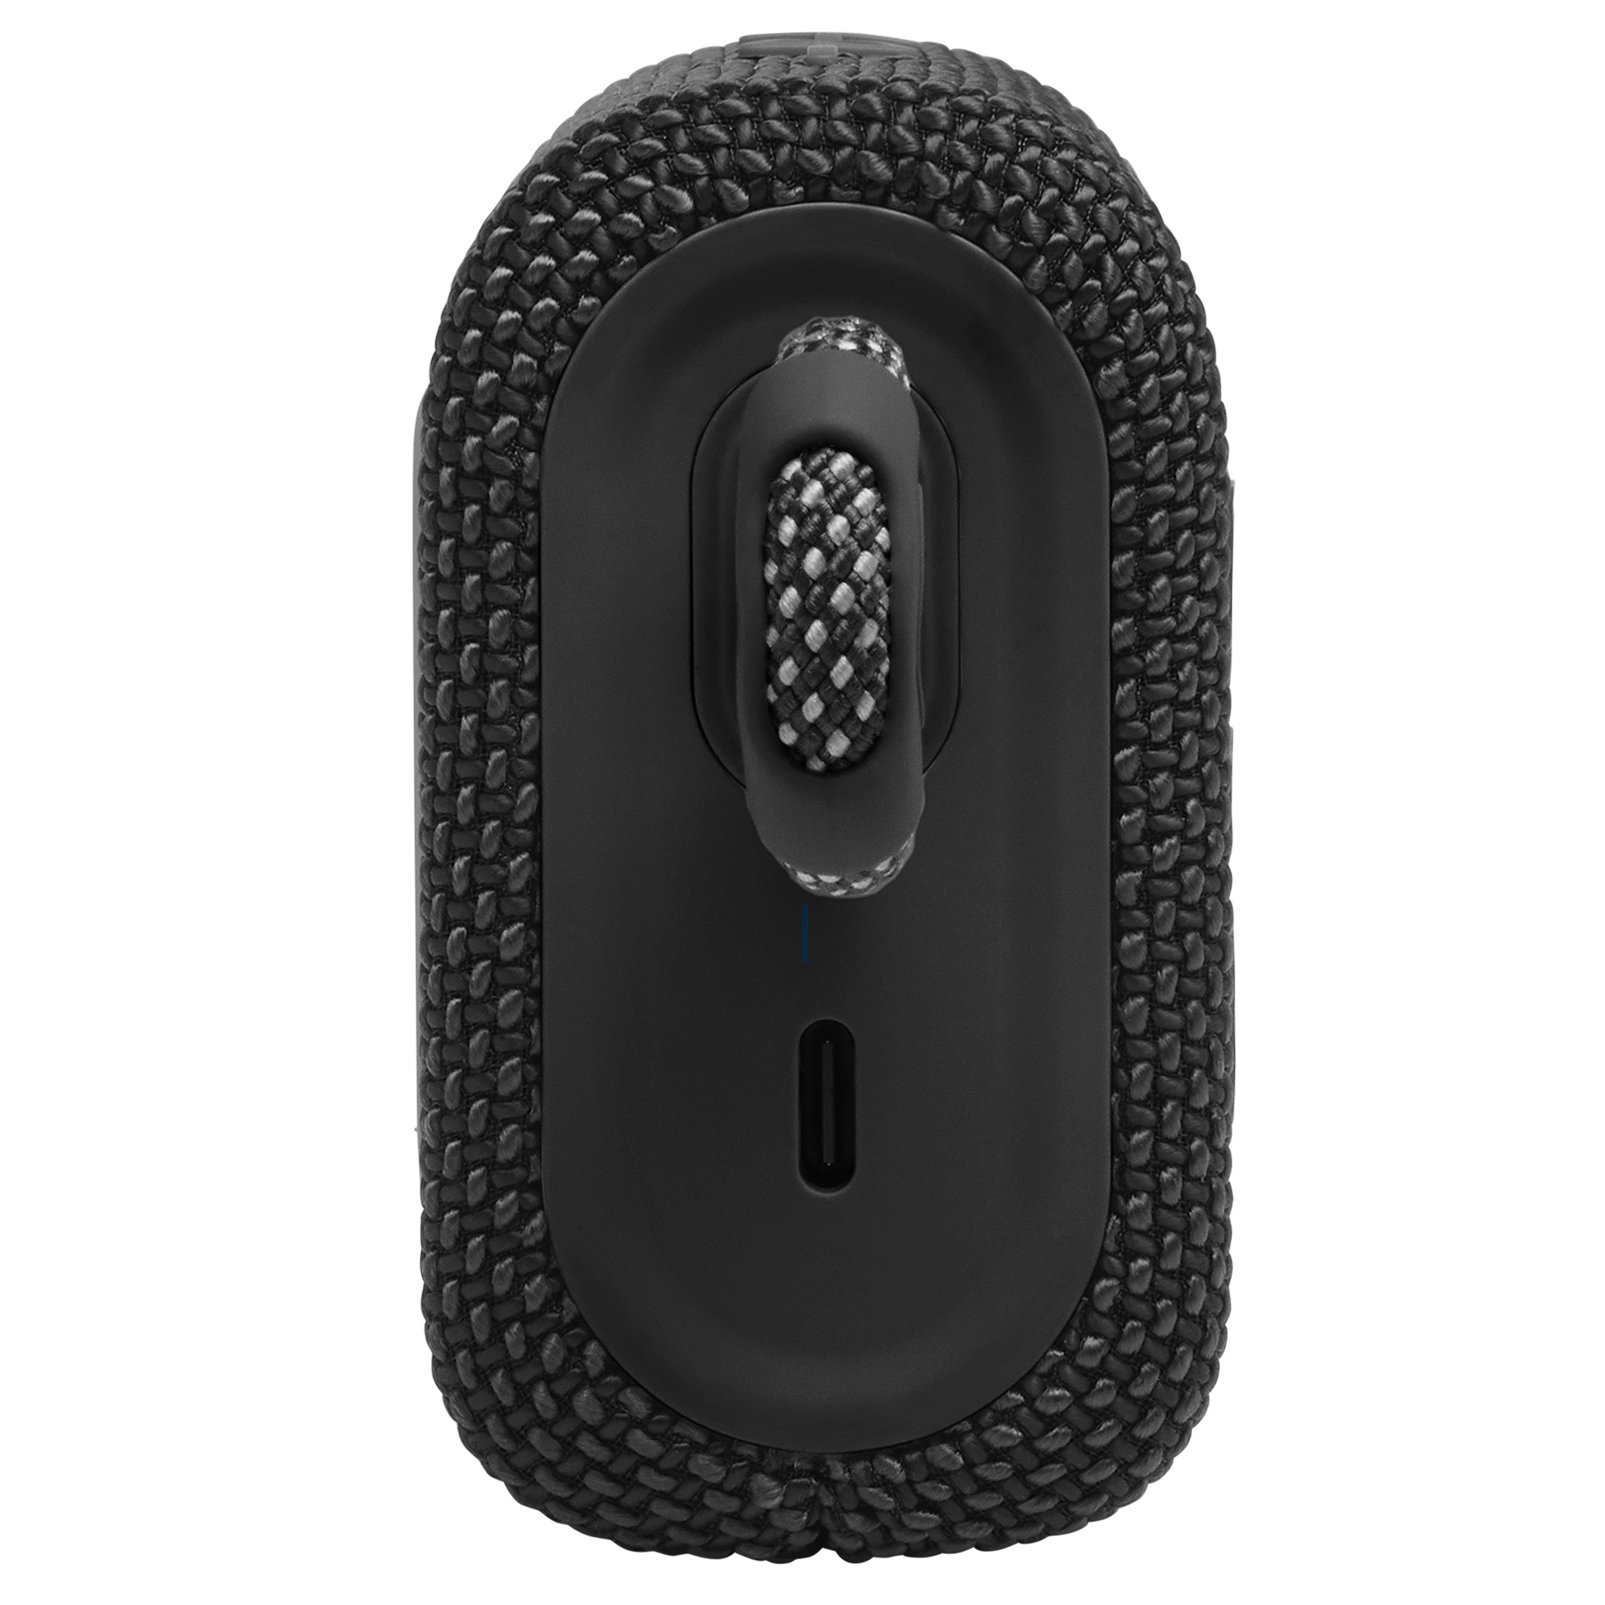 JBL Go 3 - Black - Portable Waterproof Speaker - Left